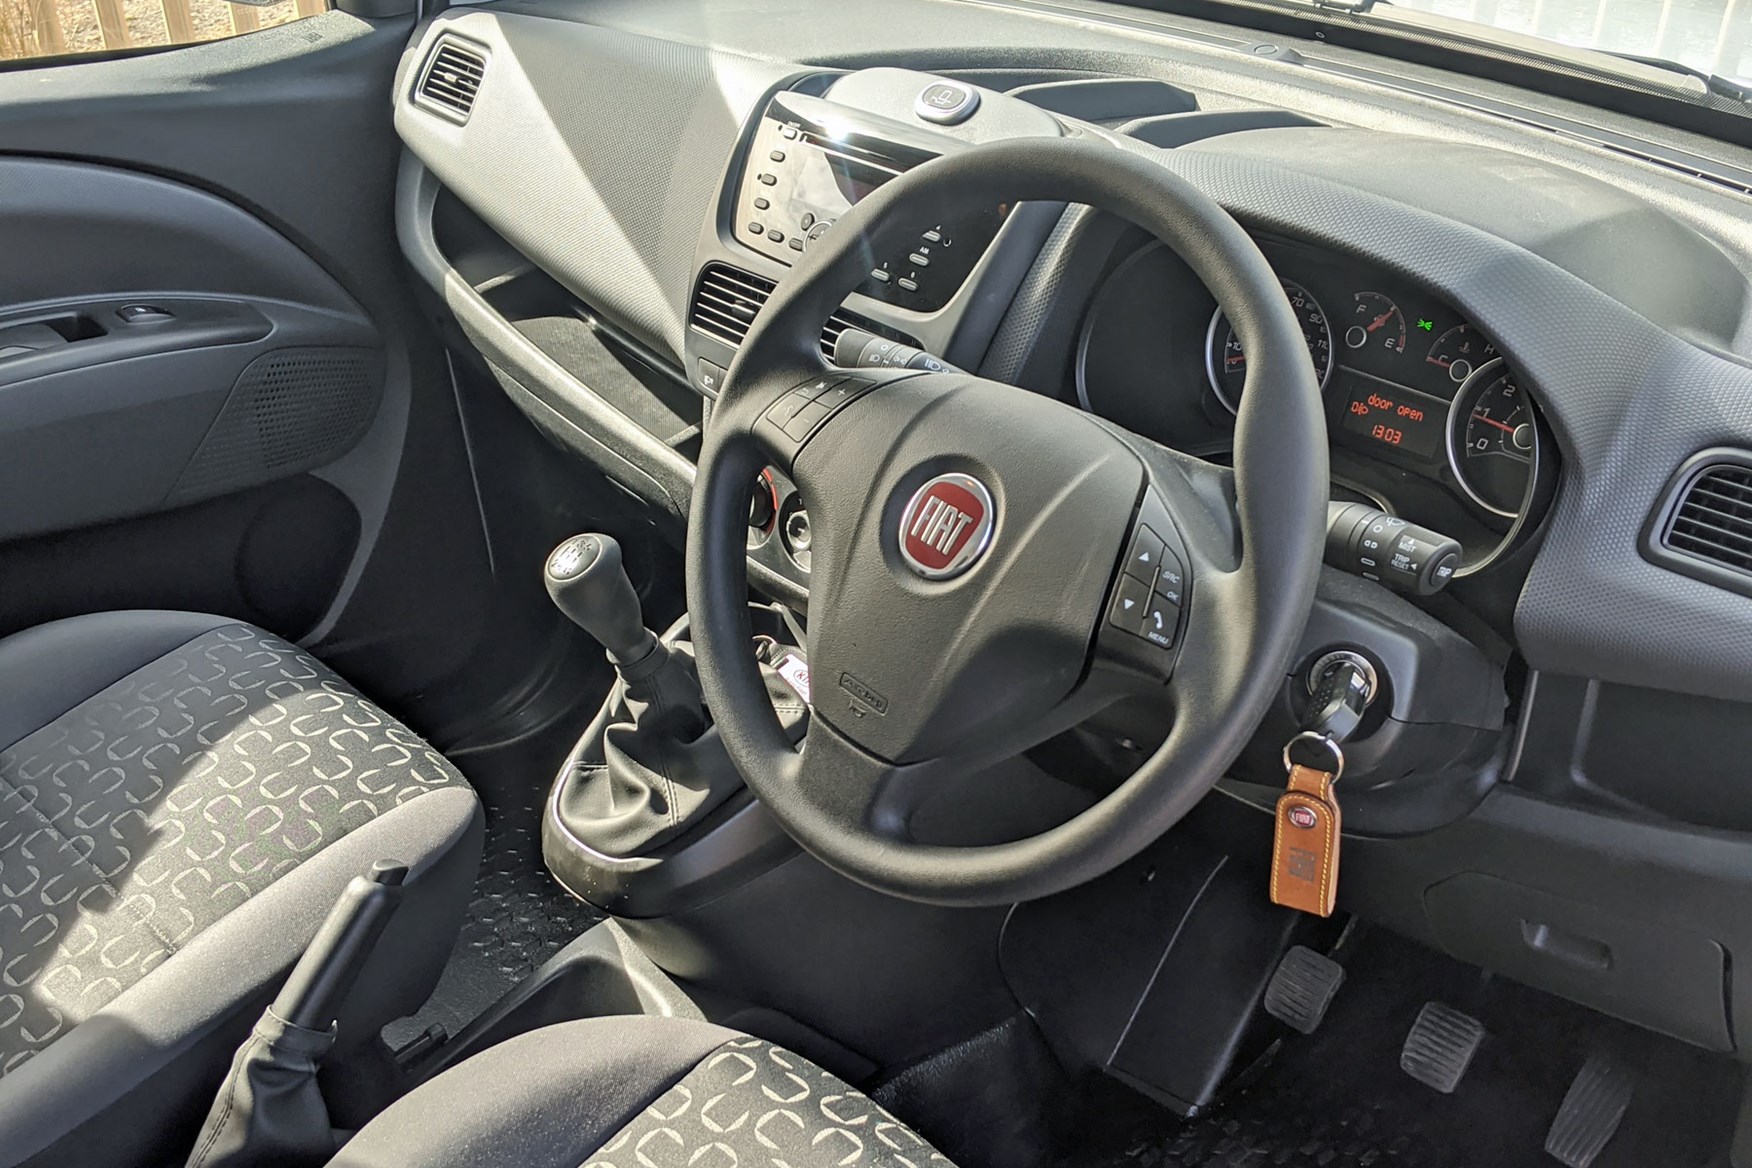 Fiat Doblo review - cab interior, 2020